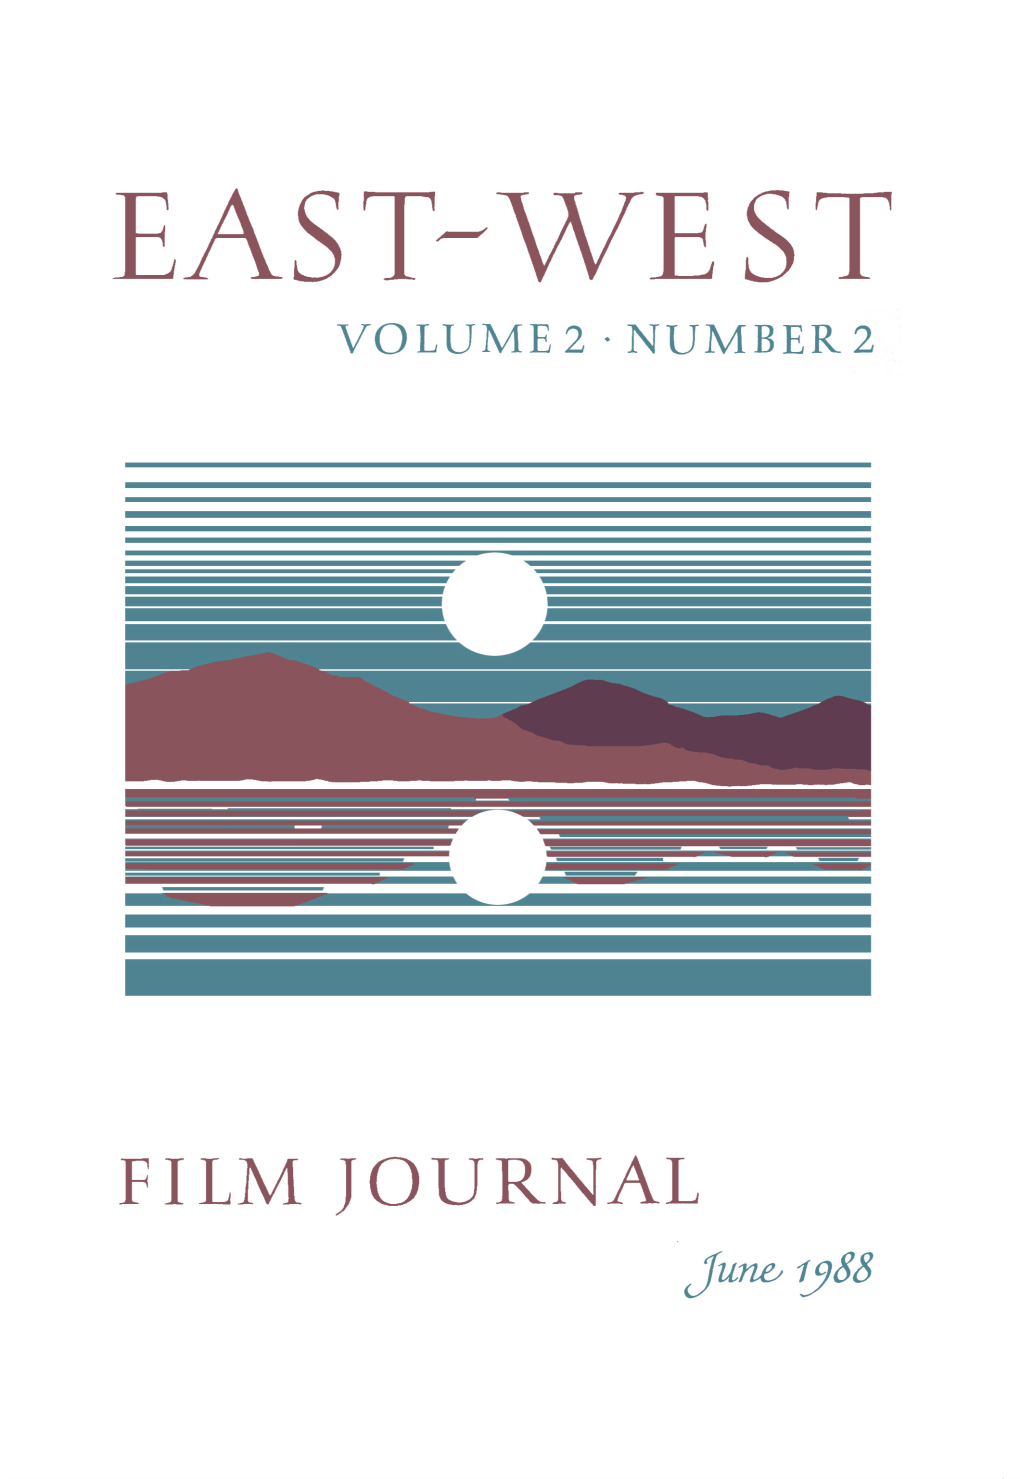 East-West Film Journal, Volume 2, No. 2